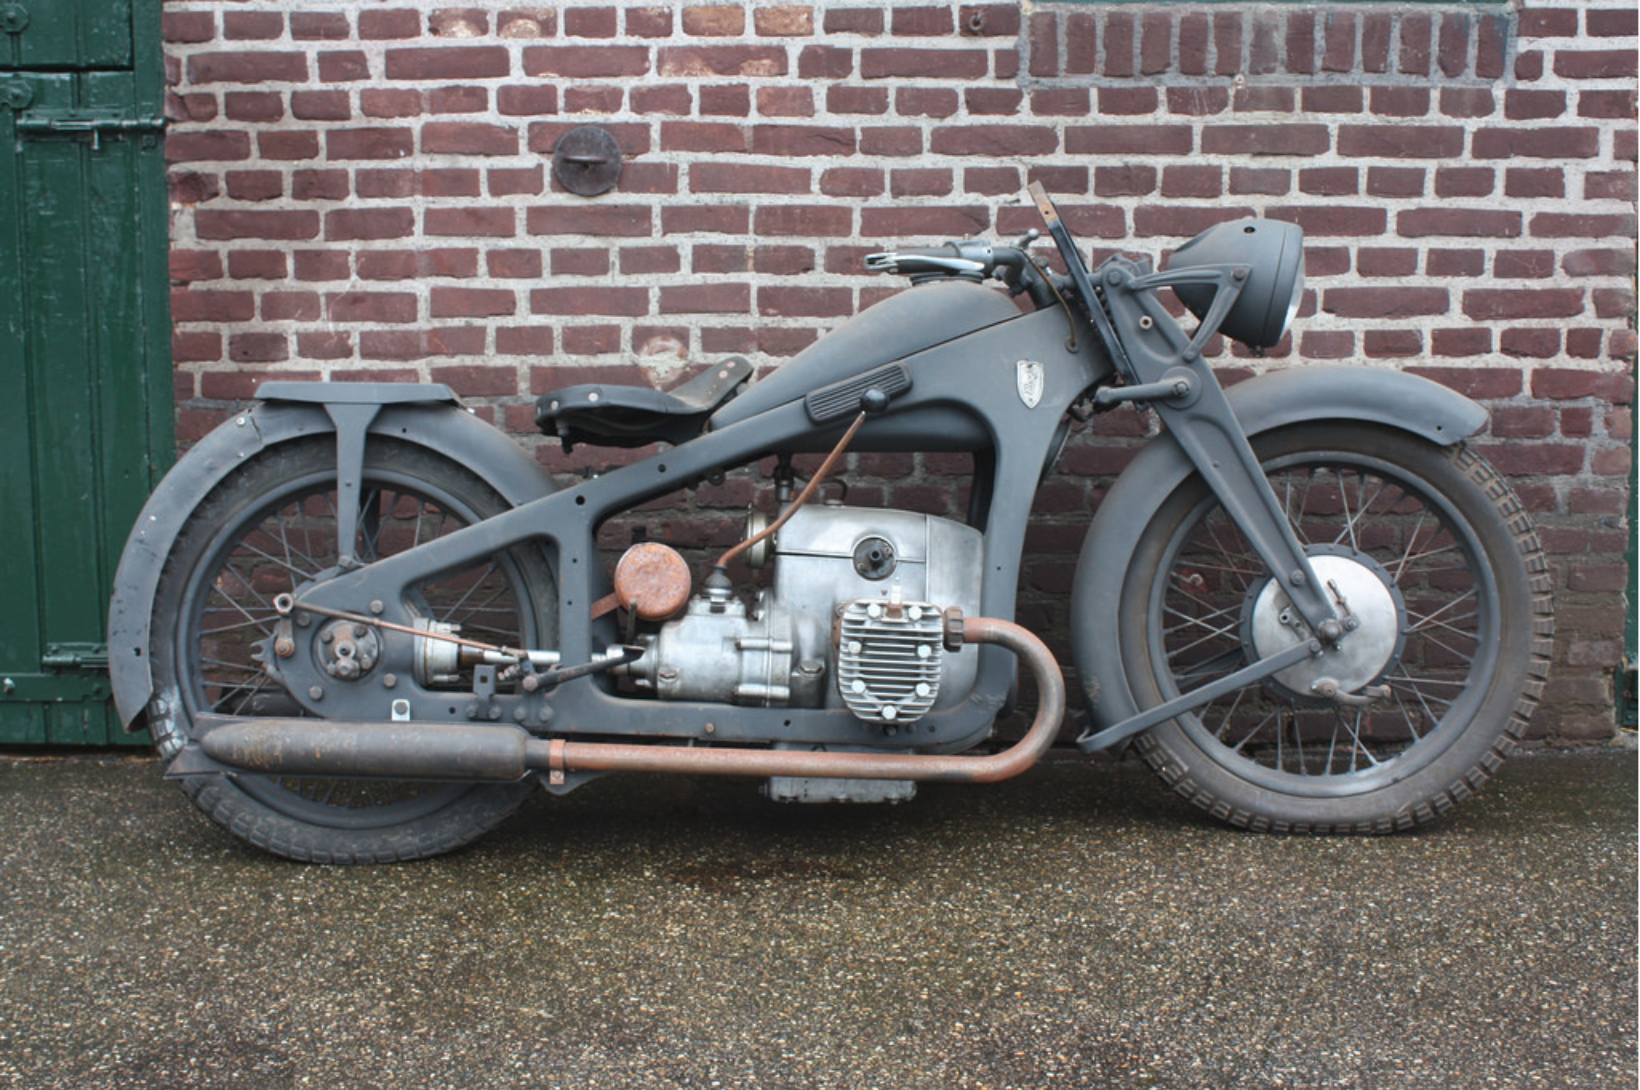 1938 Zundapp KS500 #128 — Vintage German Motorcycles